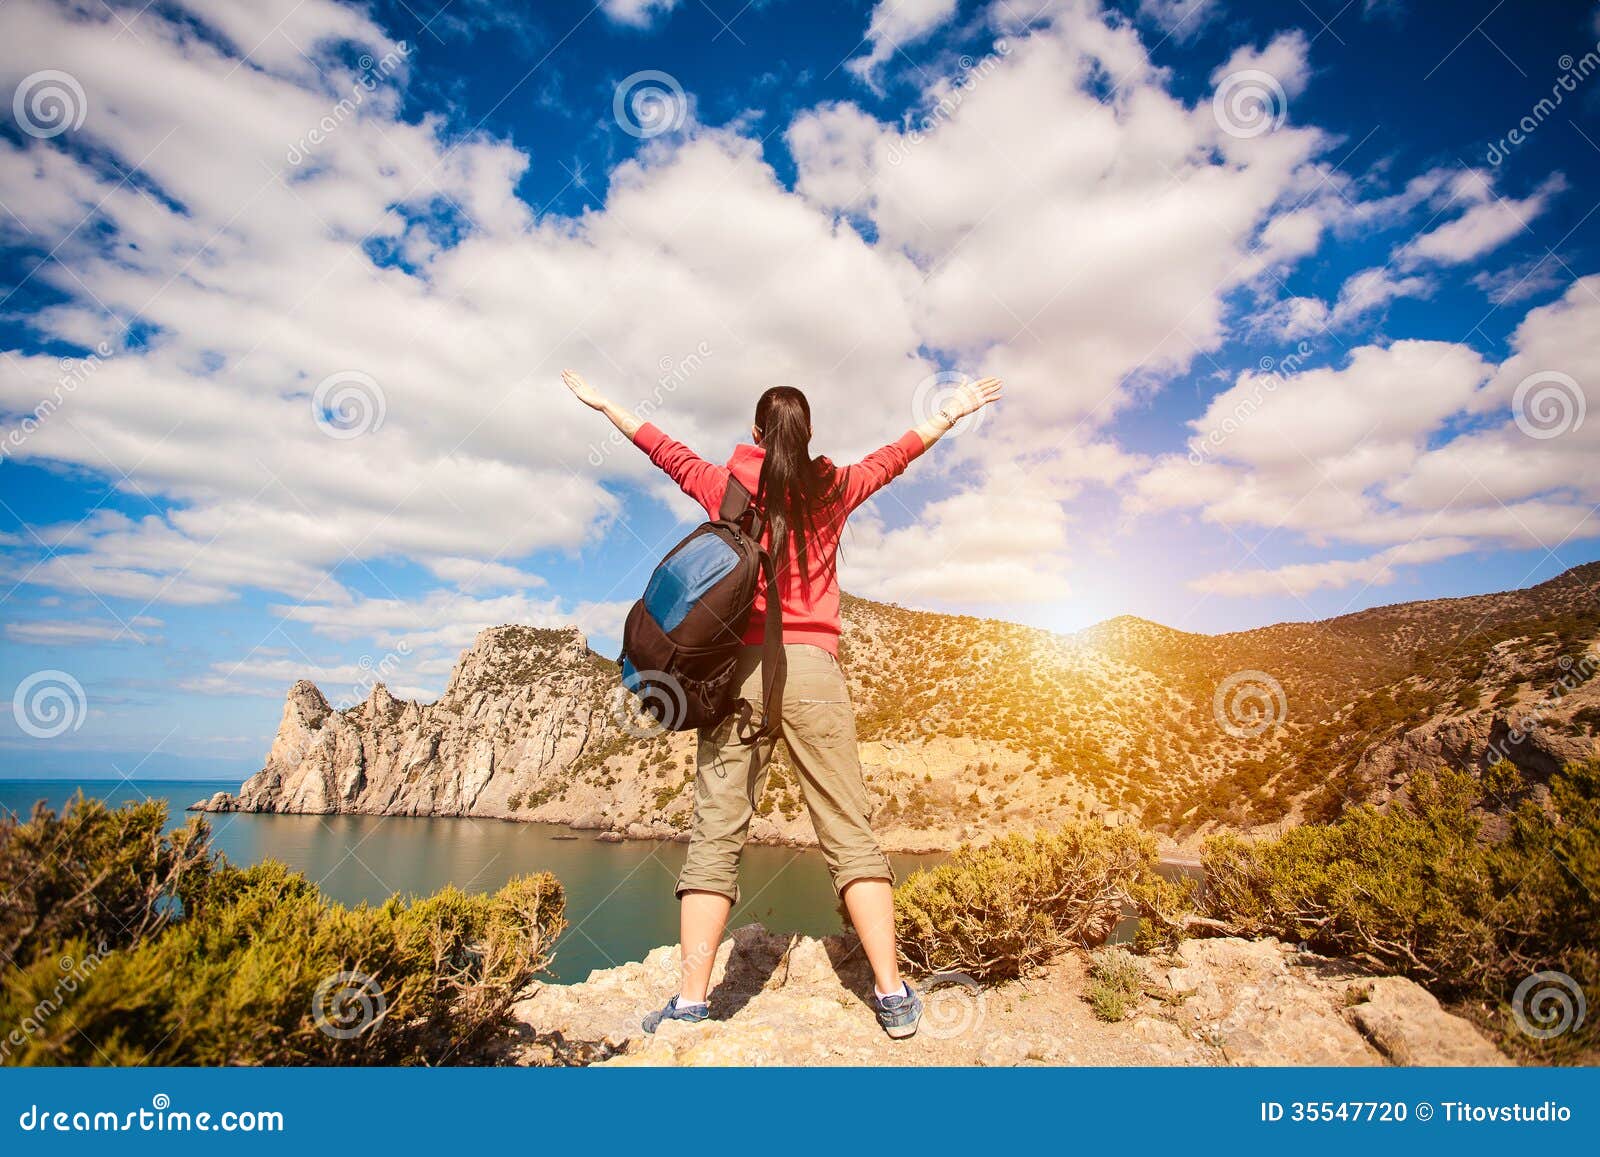 woman tourist is enjoying landscape